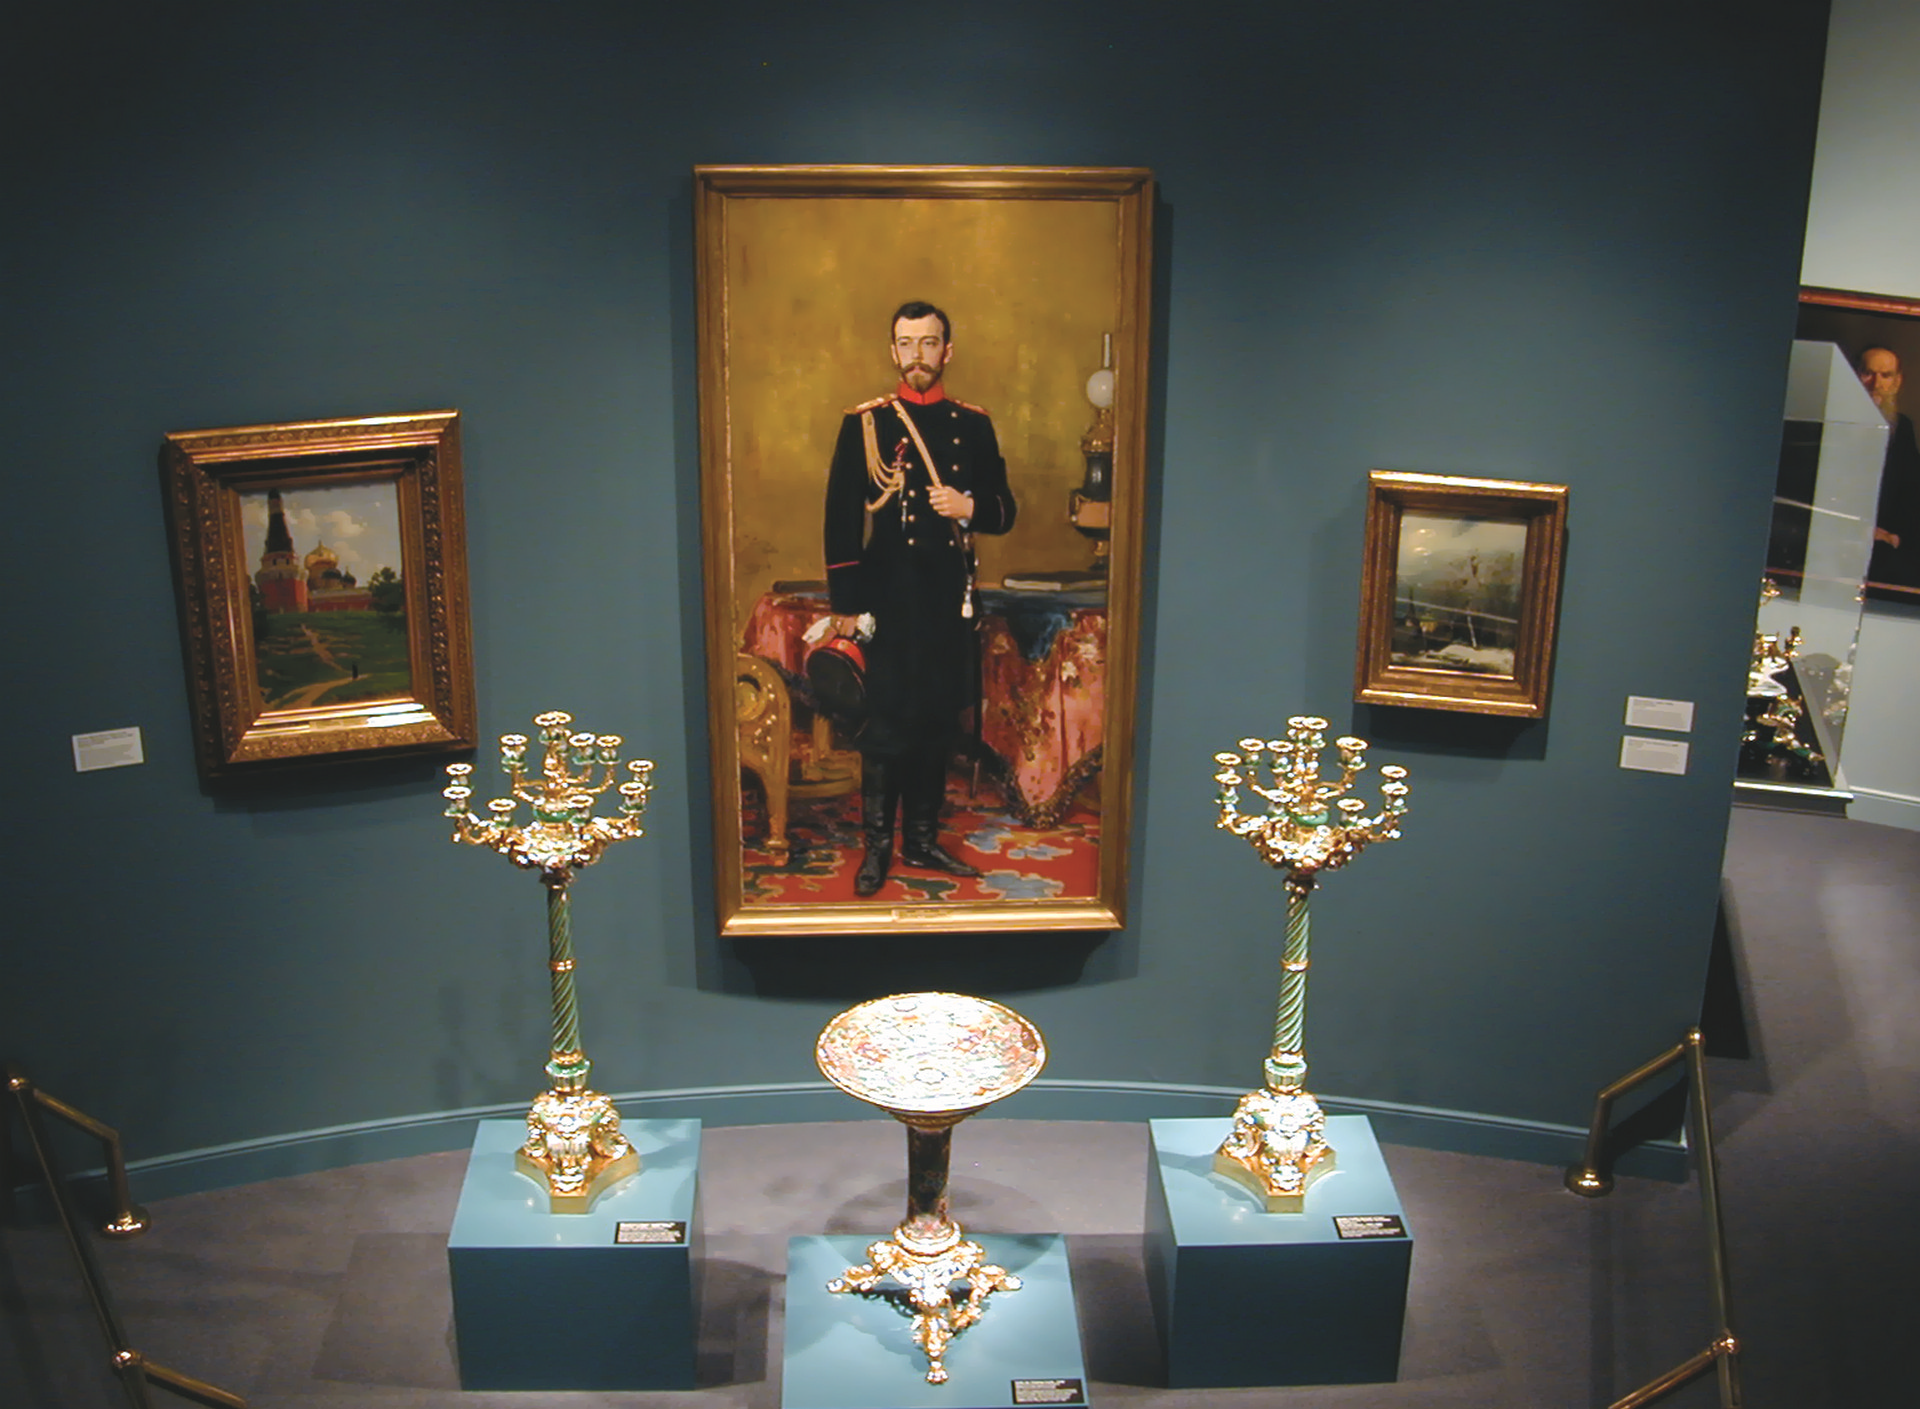 Photo: Treasures of the Czars, Florida International Museum, St. Petersburg, FL